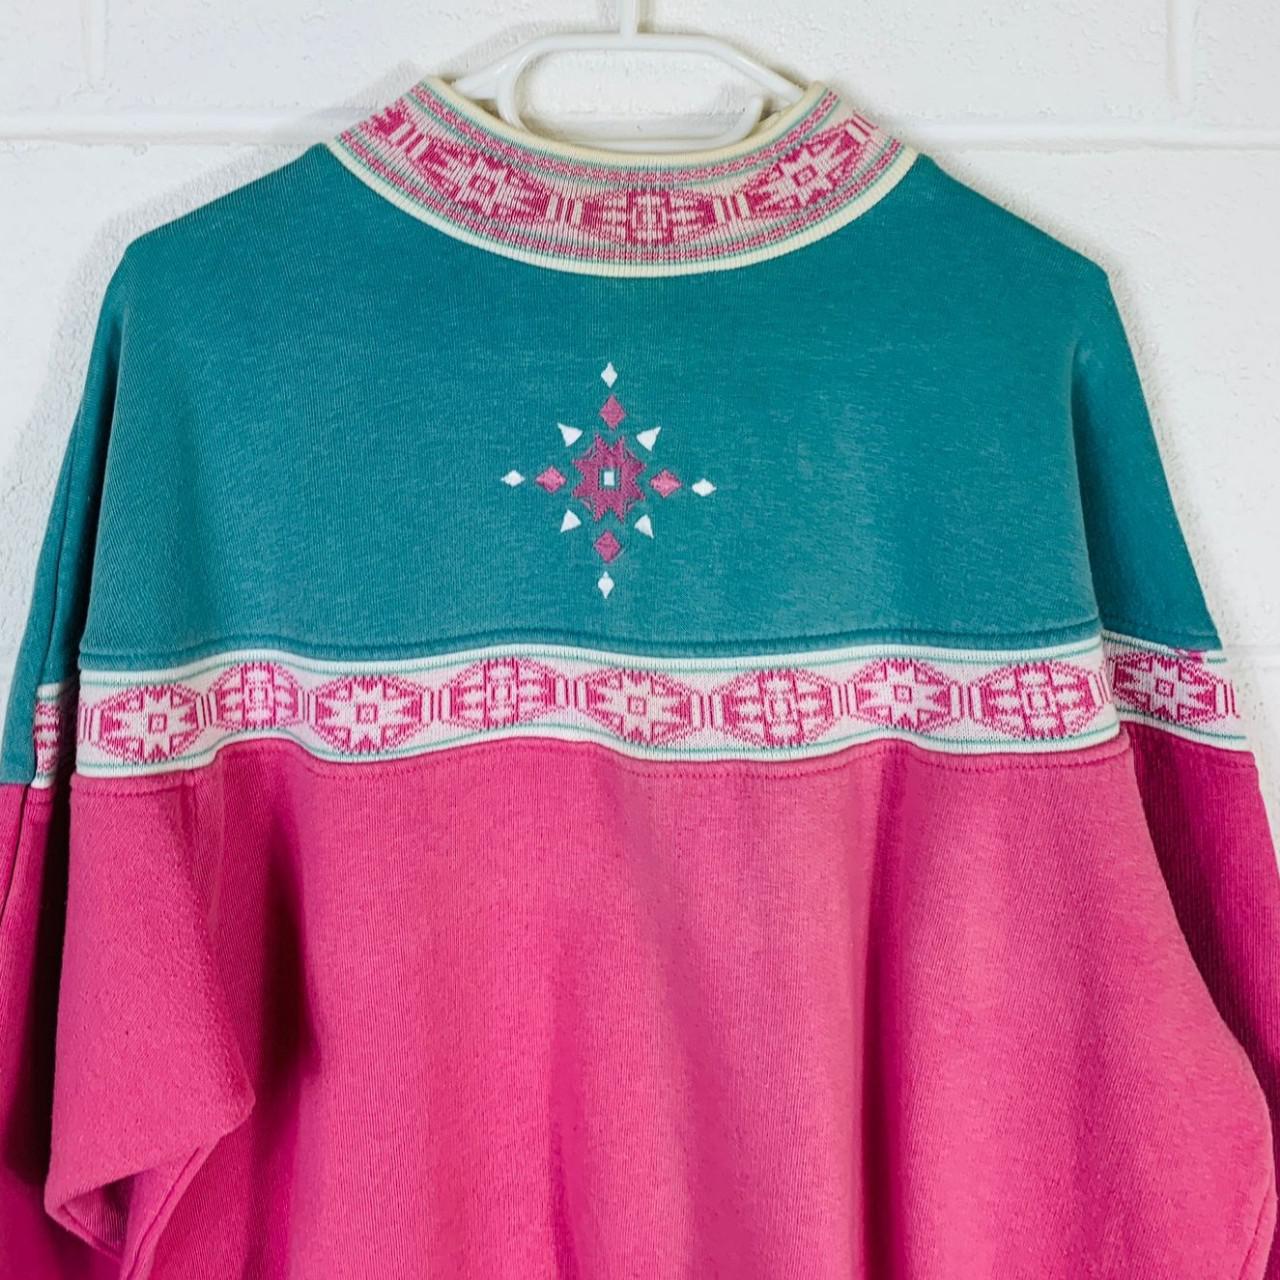 Product Image 1 - Vintage 90s Sweatshirt 

Pink and